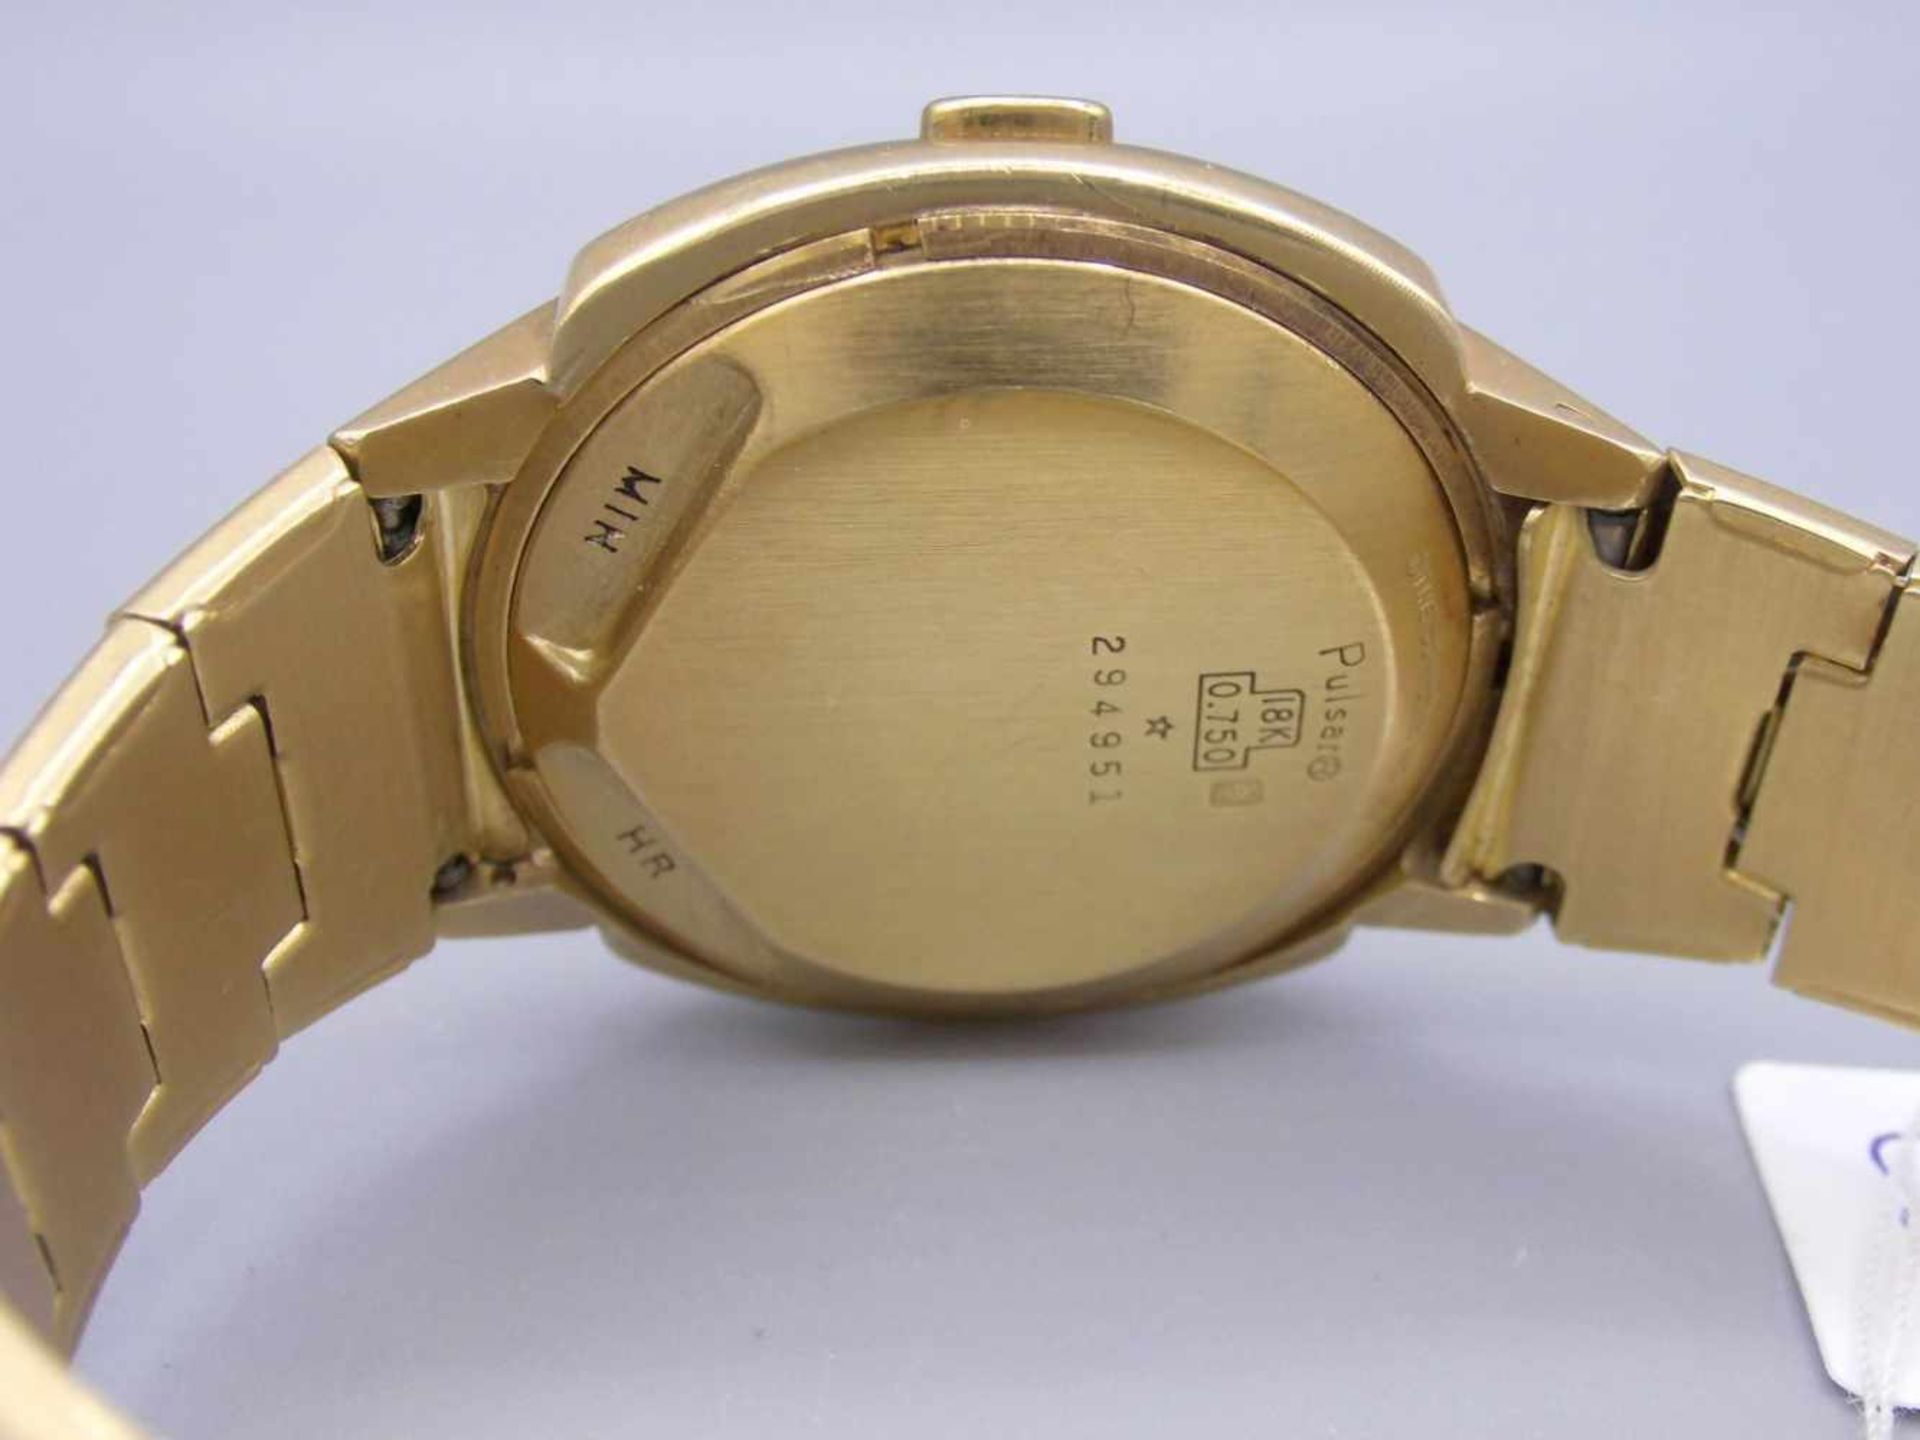 GOLDENE ARMBANDUHR / DIGITALUHR : Pulsar P3 "Date Command" / digital watch, 1970er Jahre, Gehäuse - Image 5 of 7